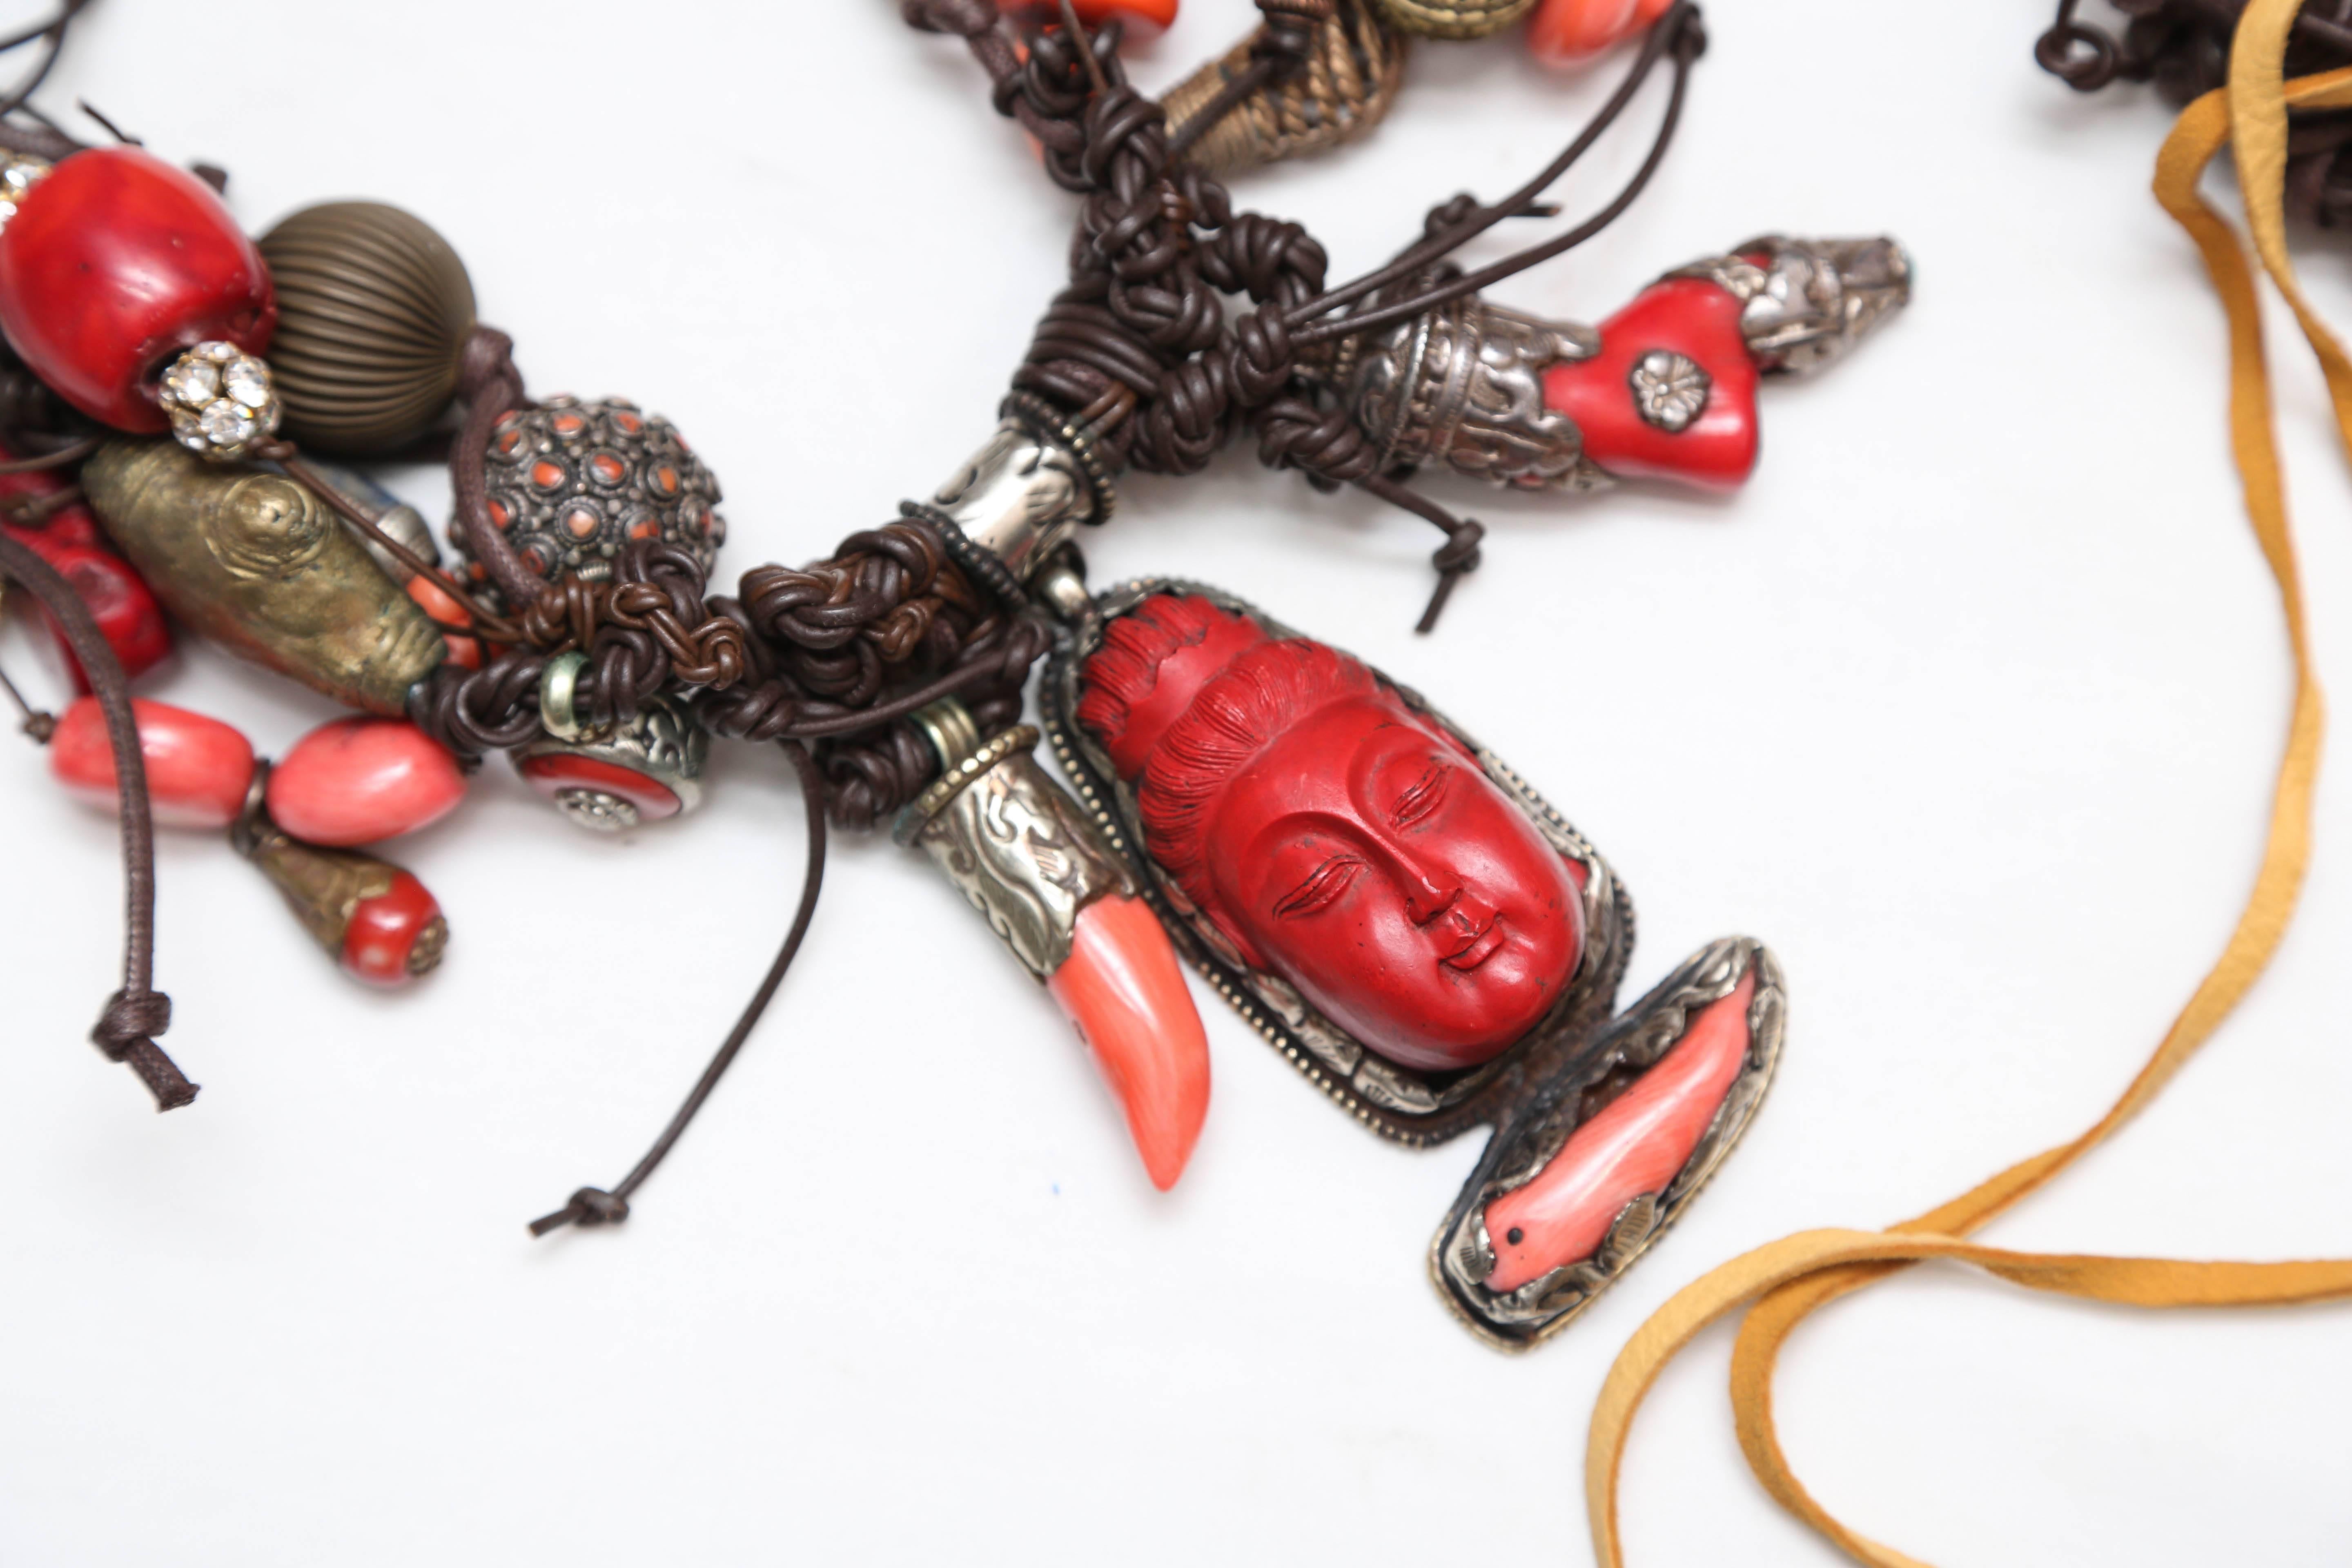 Folk Art Marzia Z Jewelry Designer, Italy, Unique Necklaces, with Ethnic, Antique Symbols